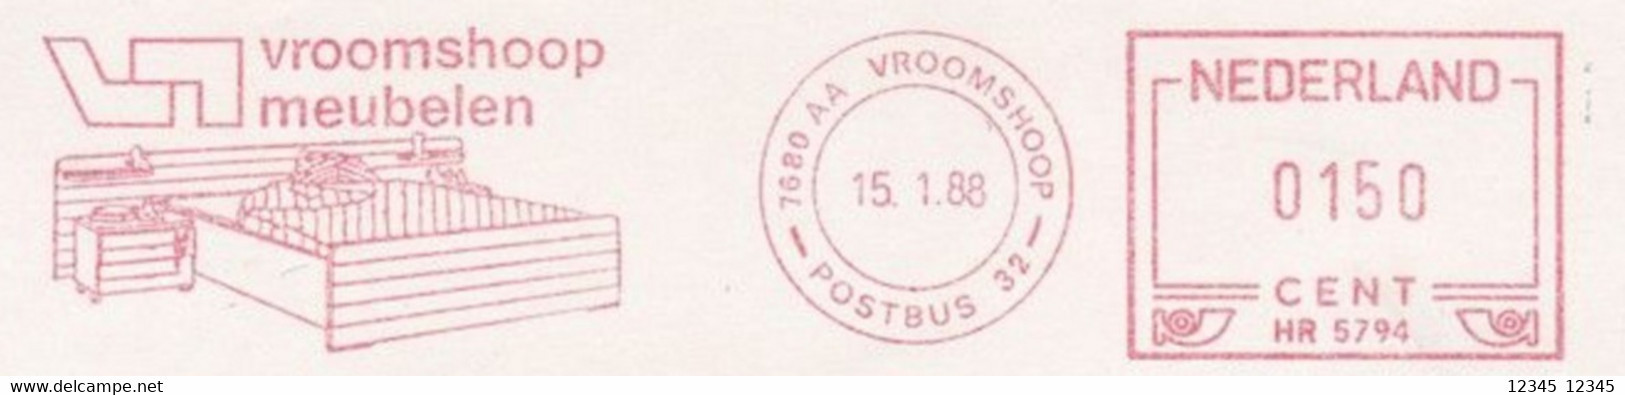 Nederland 1988, Vroomshoop Meubelen, Vroomshoop Furniture - Franking Machines (EMA)